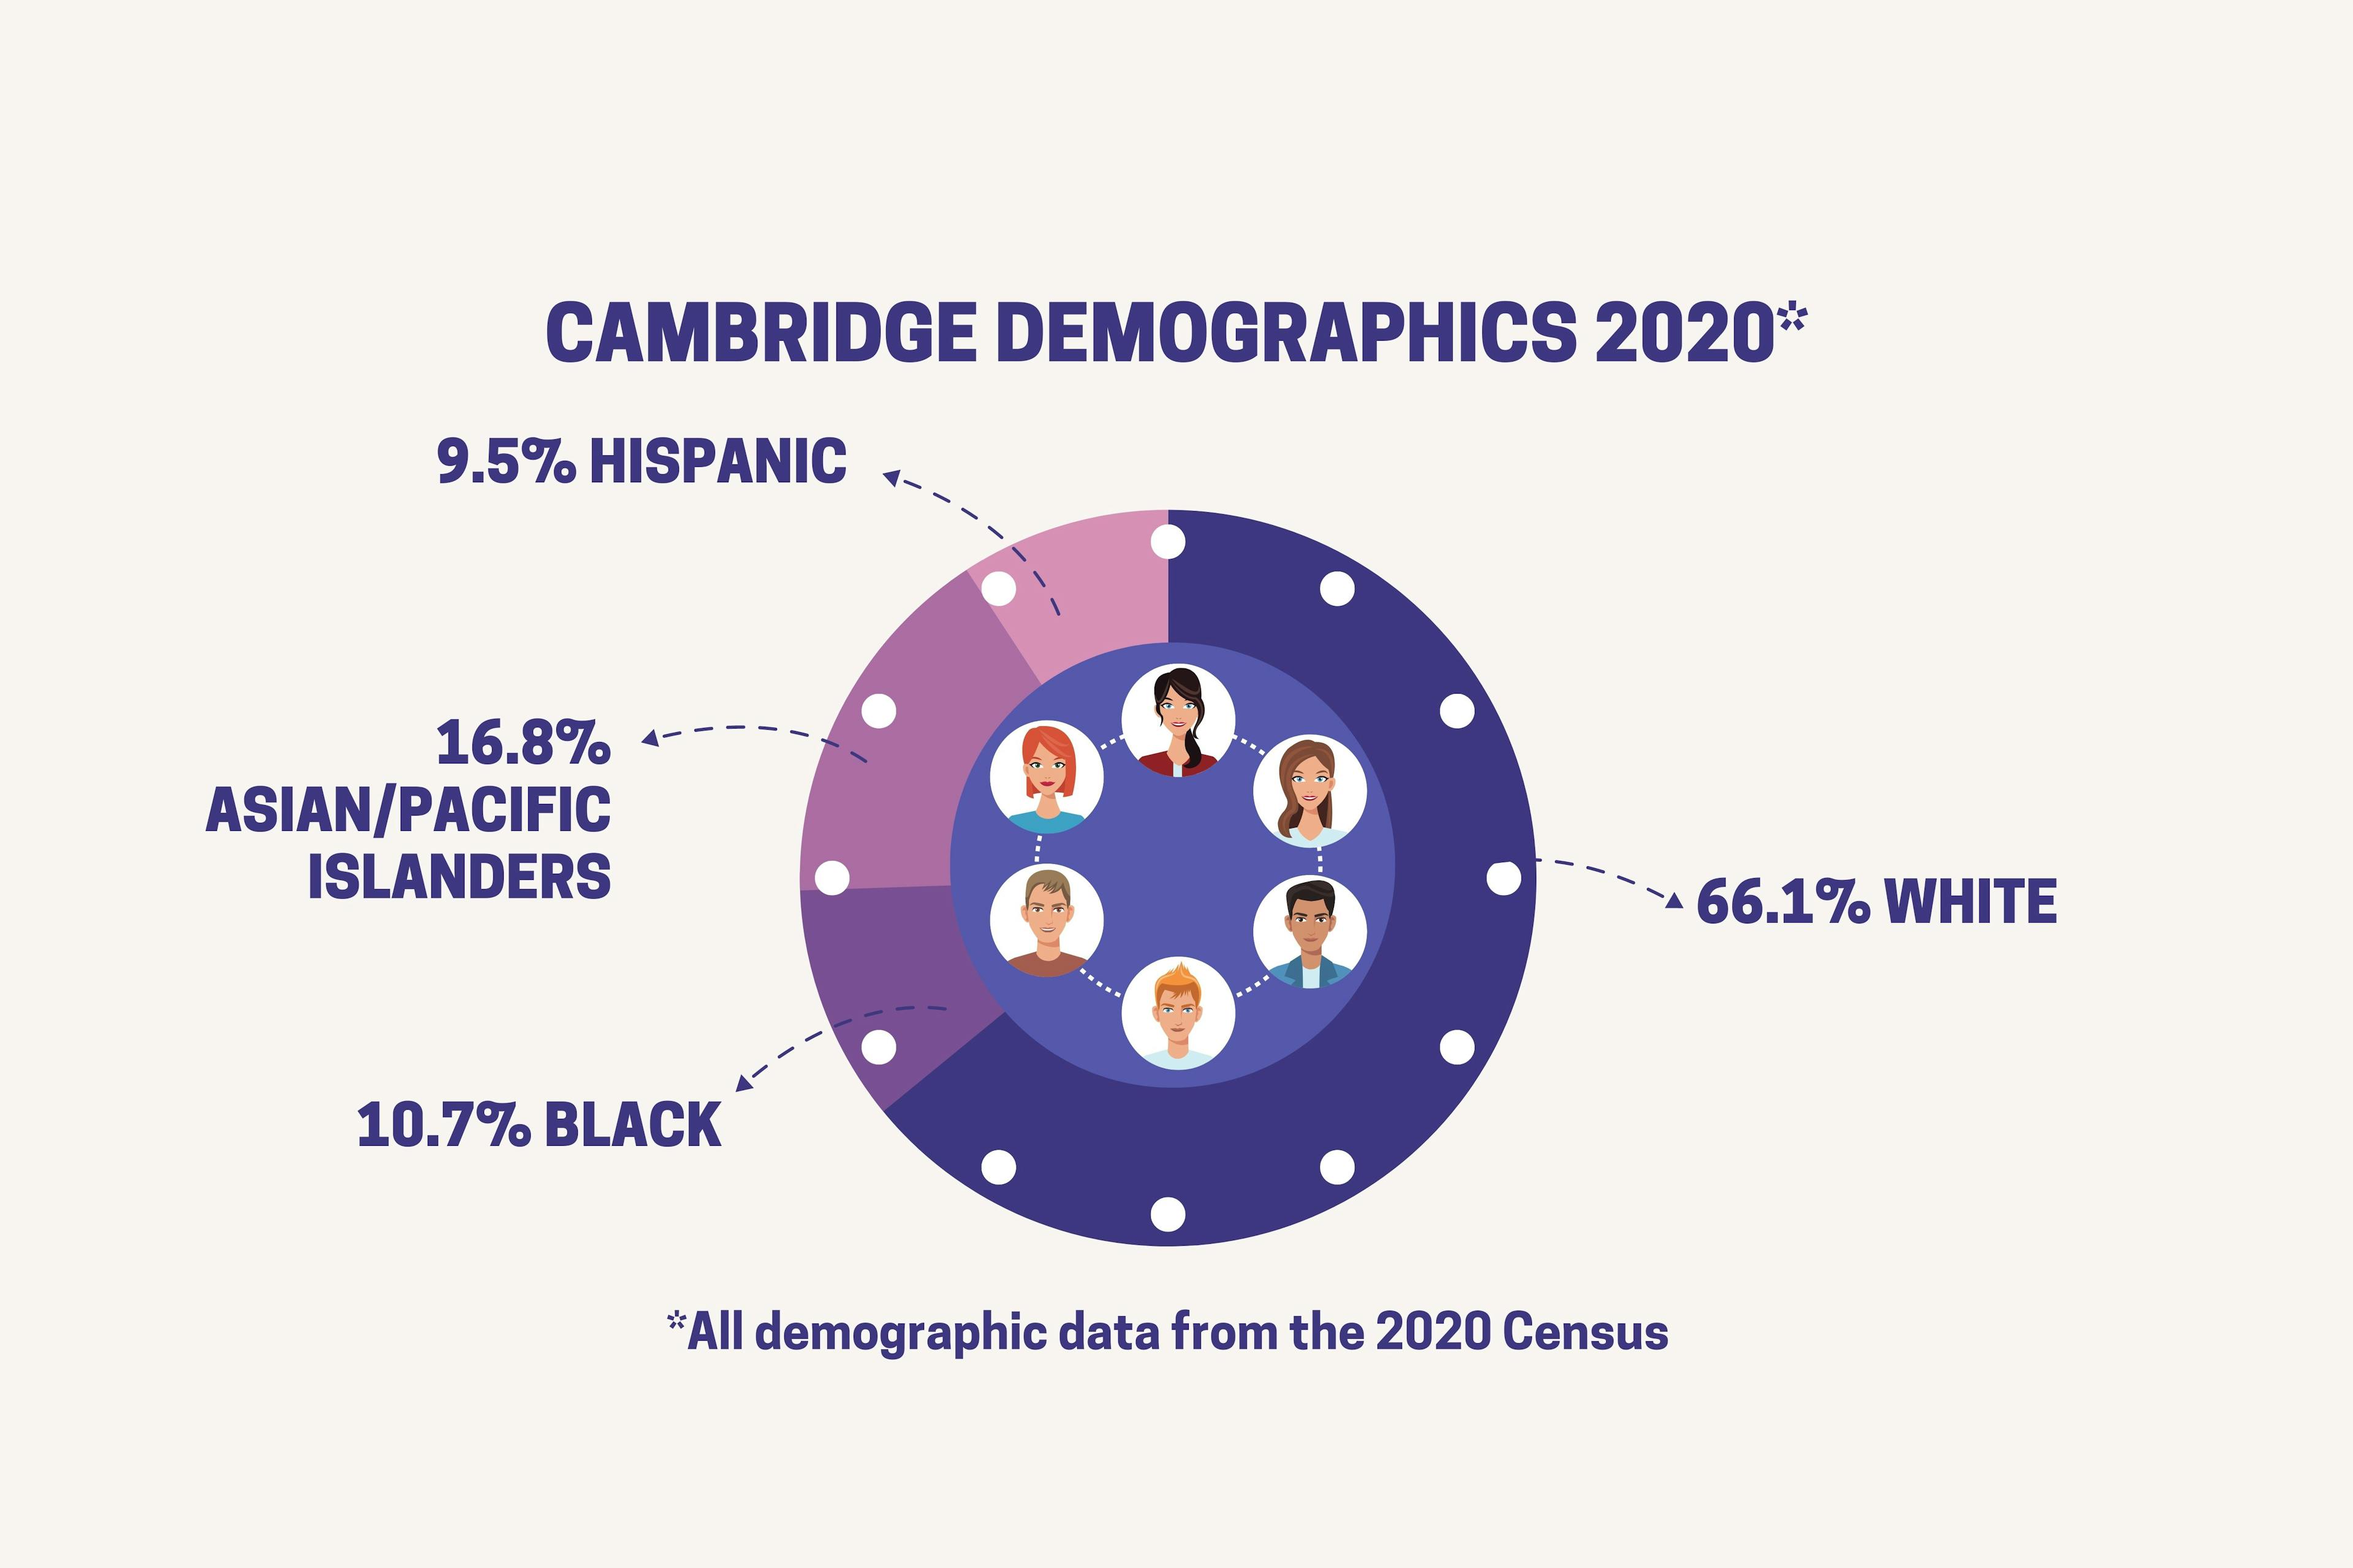 Cambridge demographics from the 2020 Census. 66.1% White. 10.7% Black. 16.8% Asian/Pacific Islanders. 9.5% Hispanic